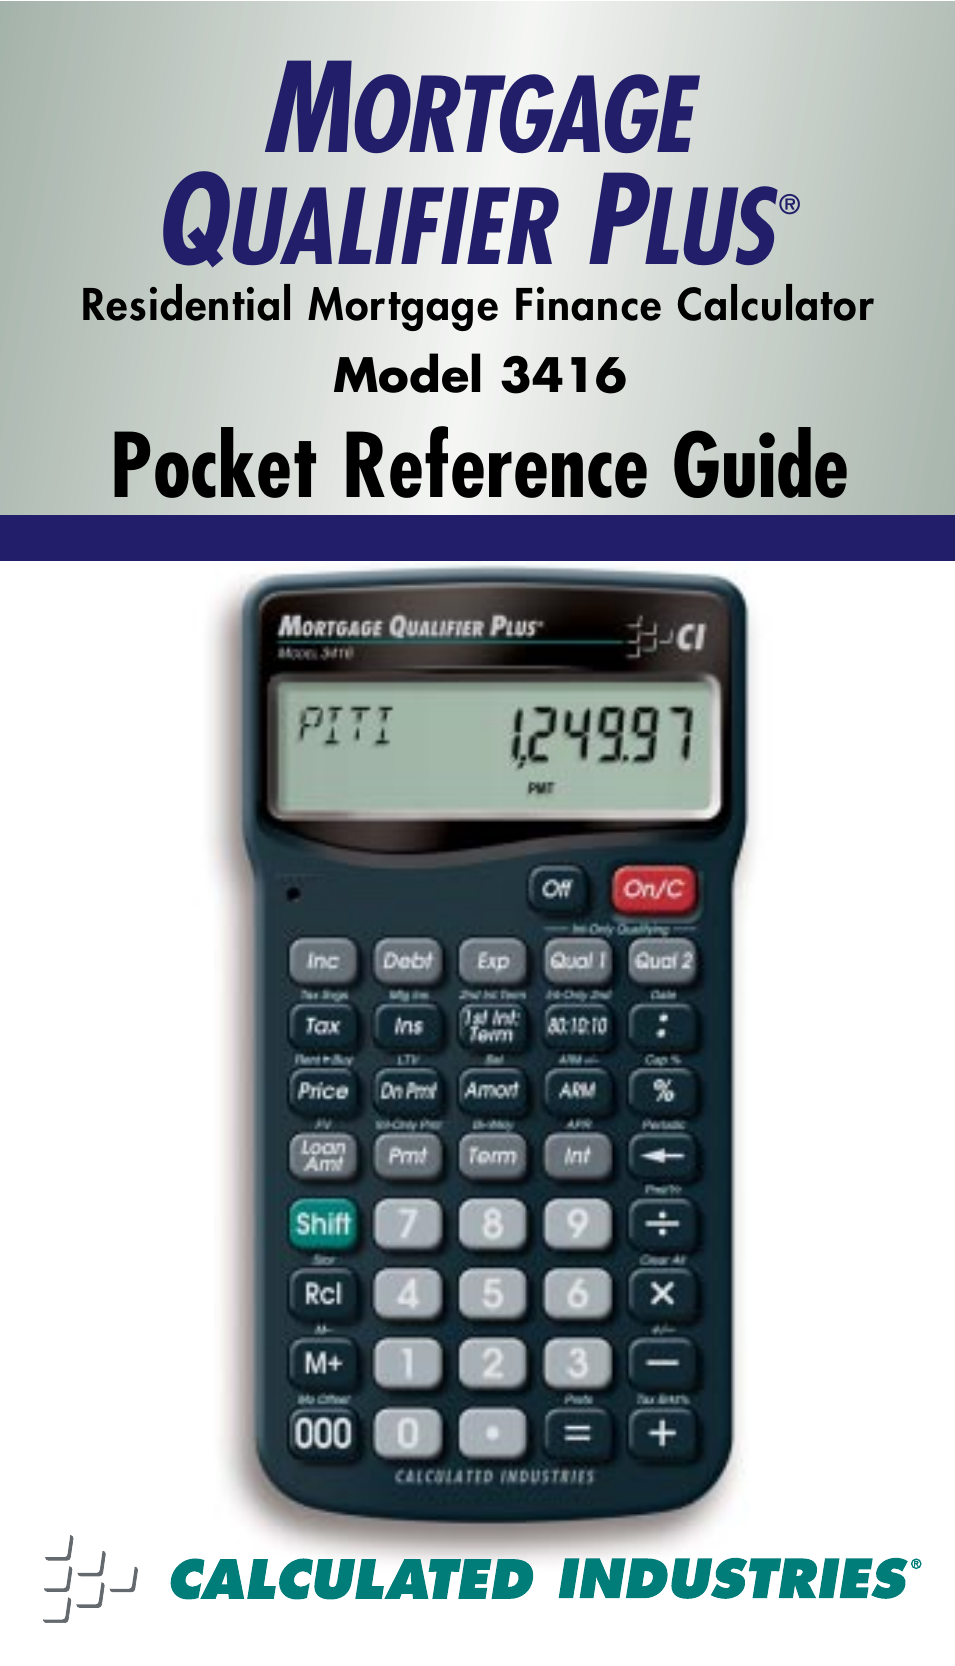 3416 Pocket Reference Guide